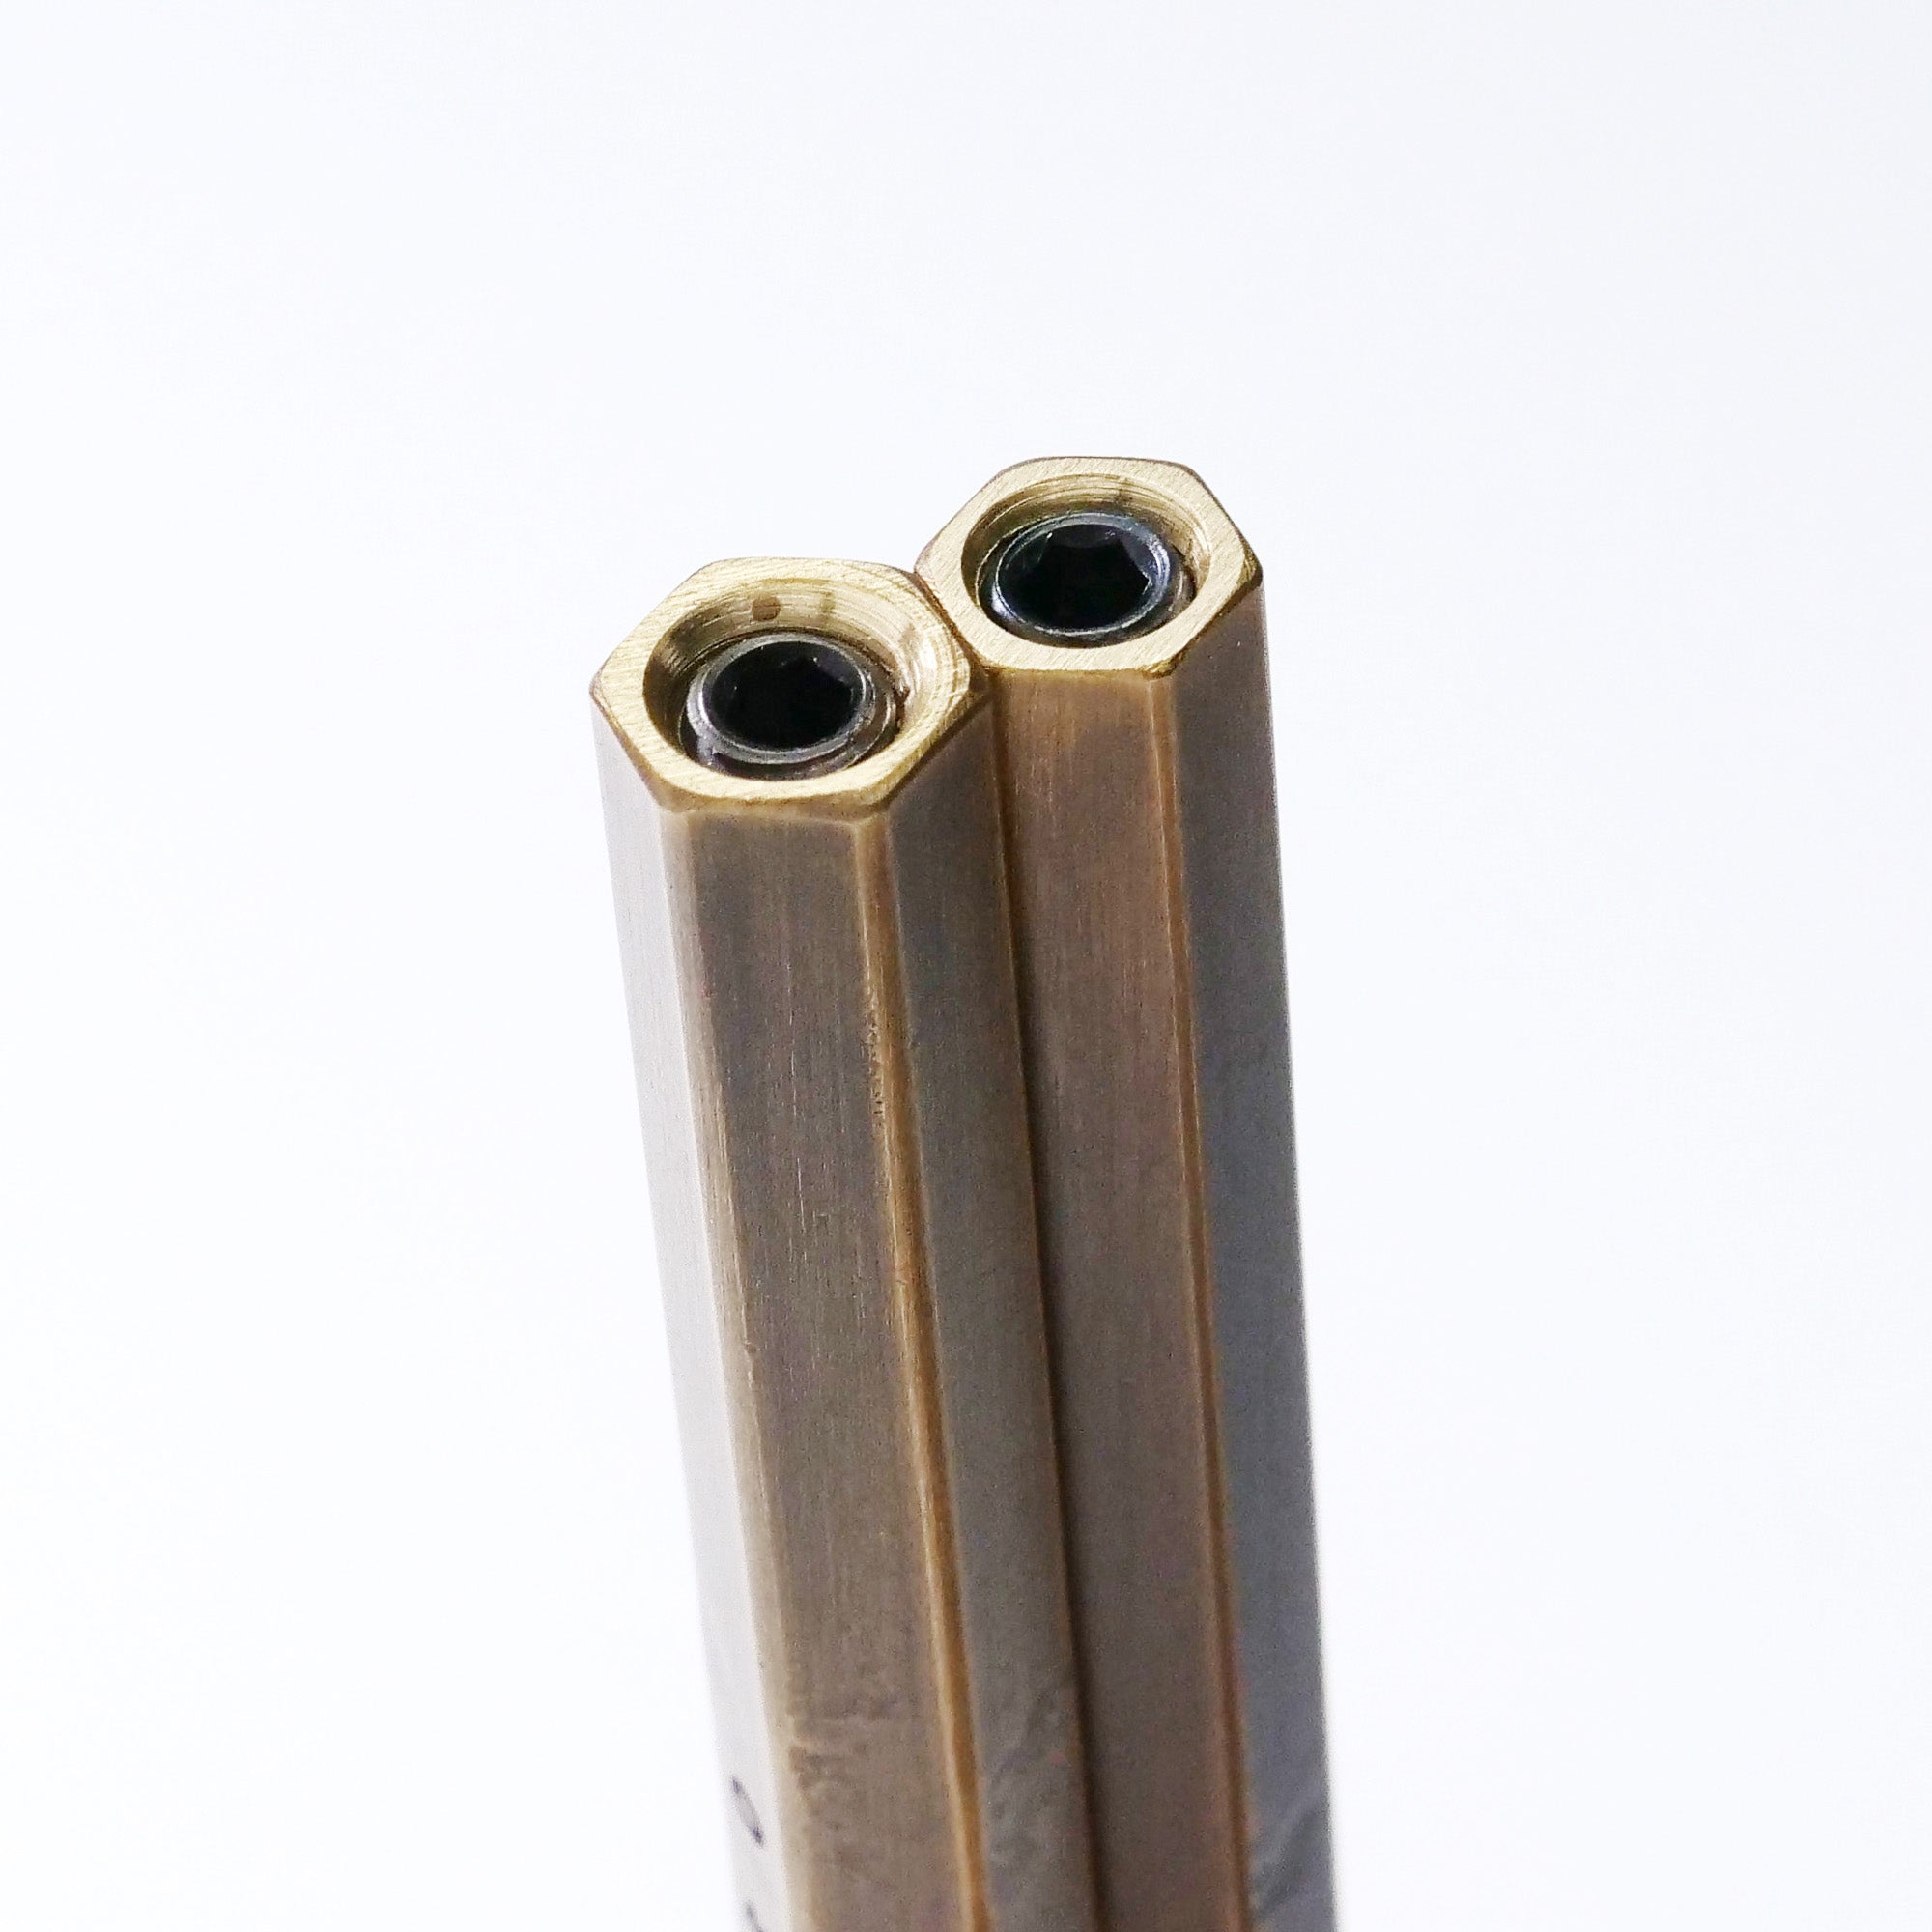 Tetzbo - Chibien Ballpoint Pen (Brass)